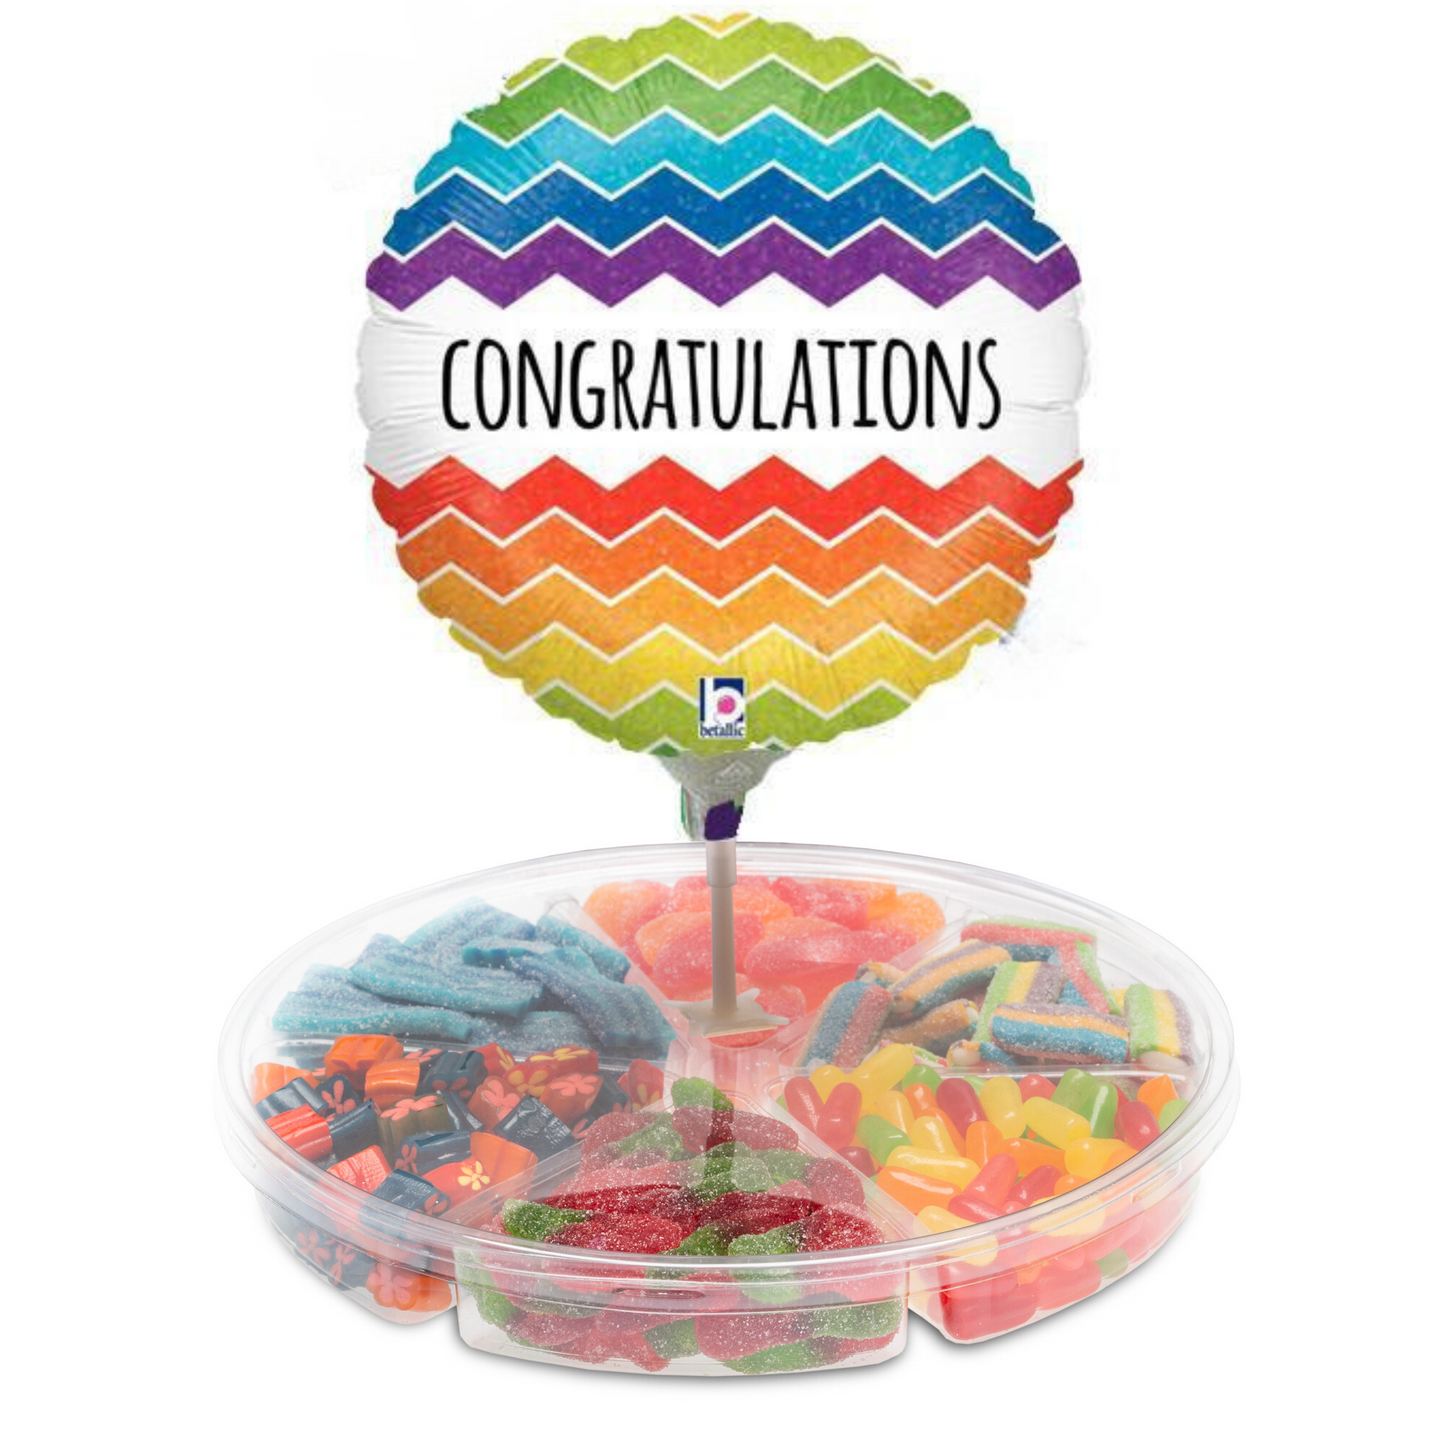 Medium Platter with Congratulations Balloon